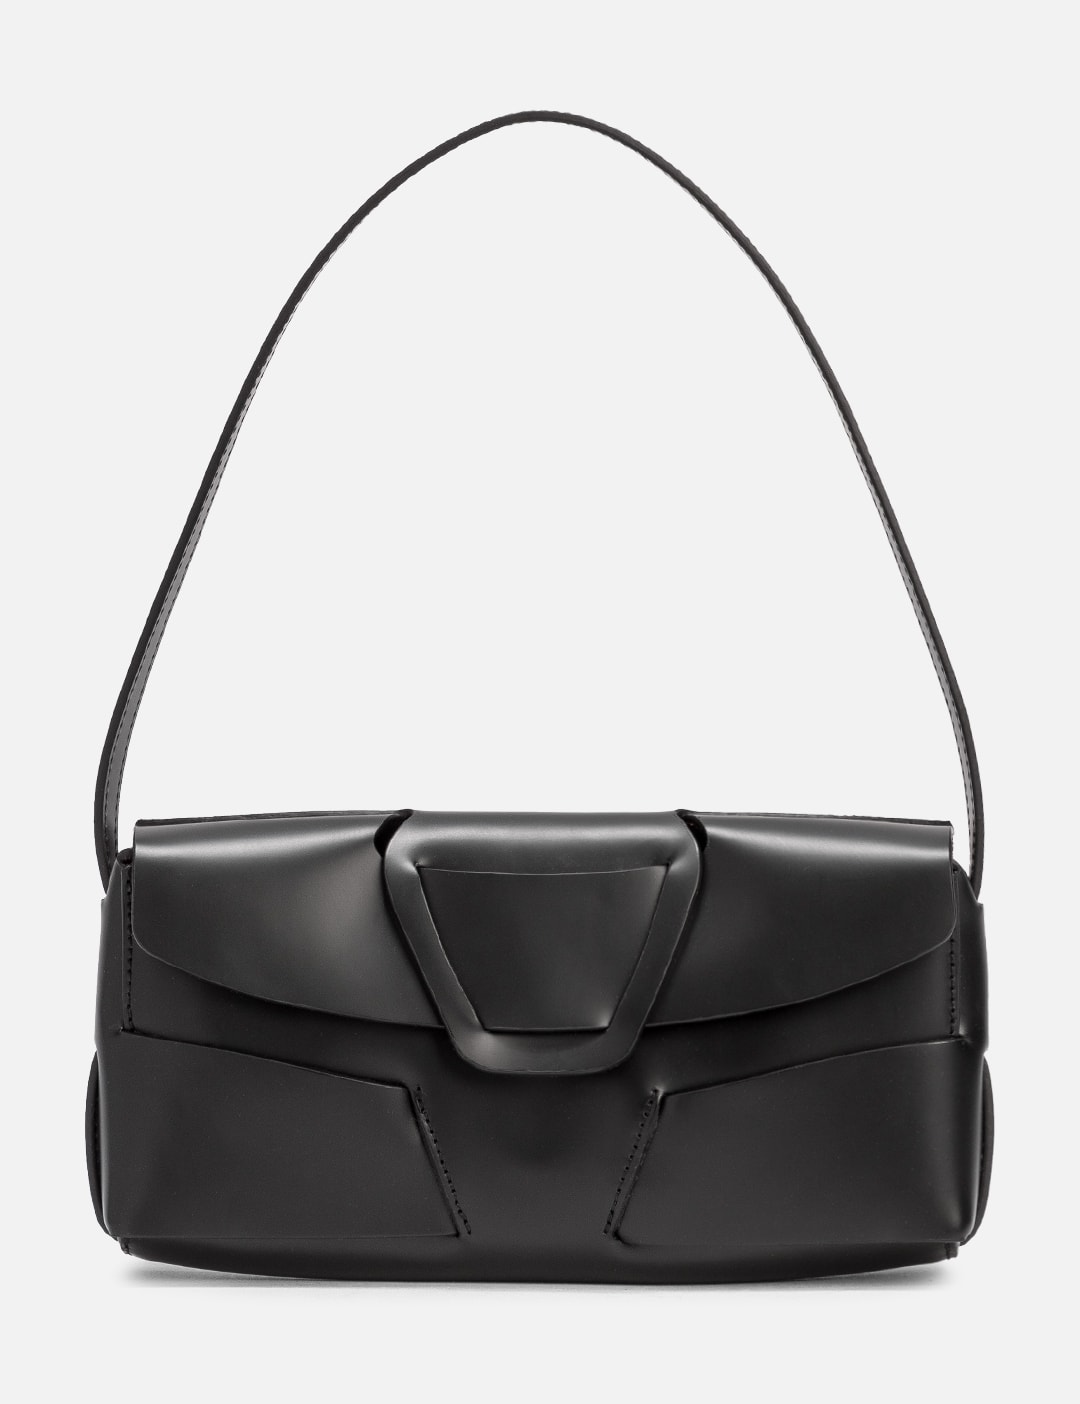 Hereu - MABRA Shoulder Bag | HBX - Globally Curated Fashion and ...